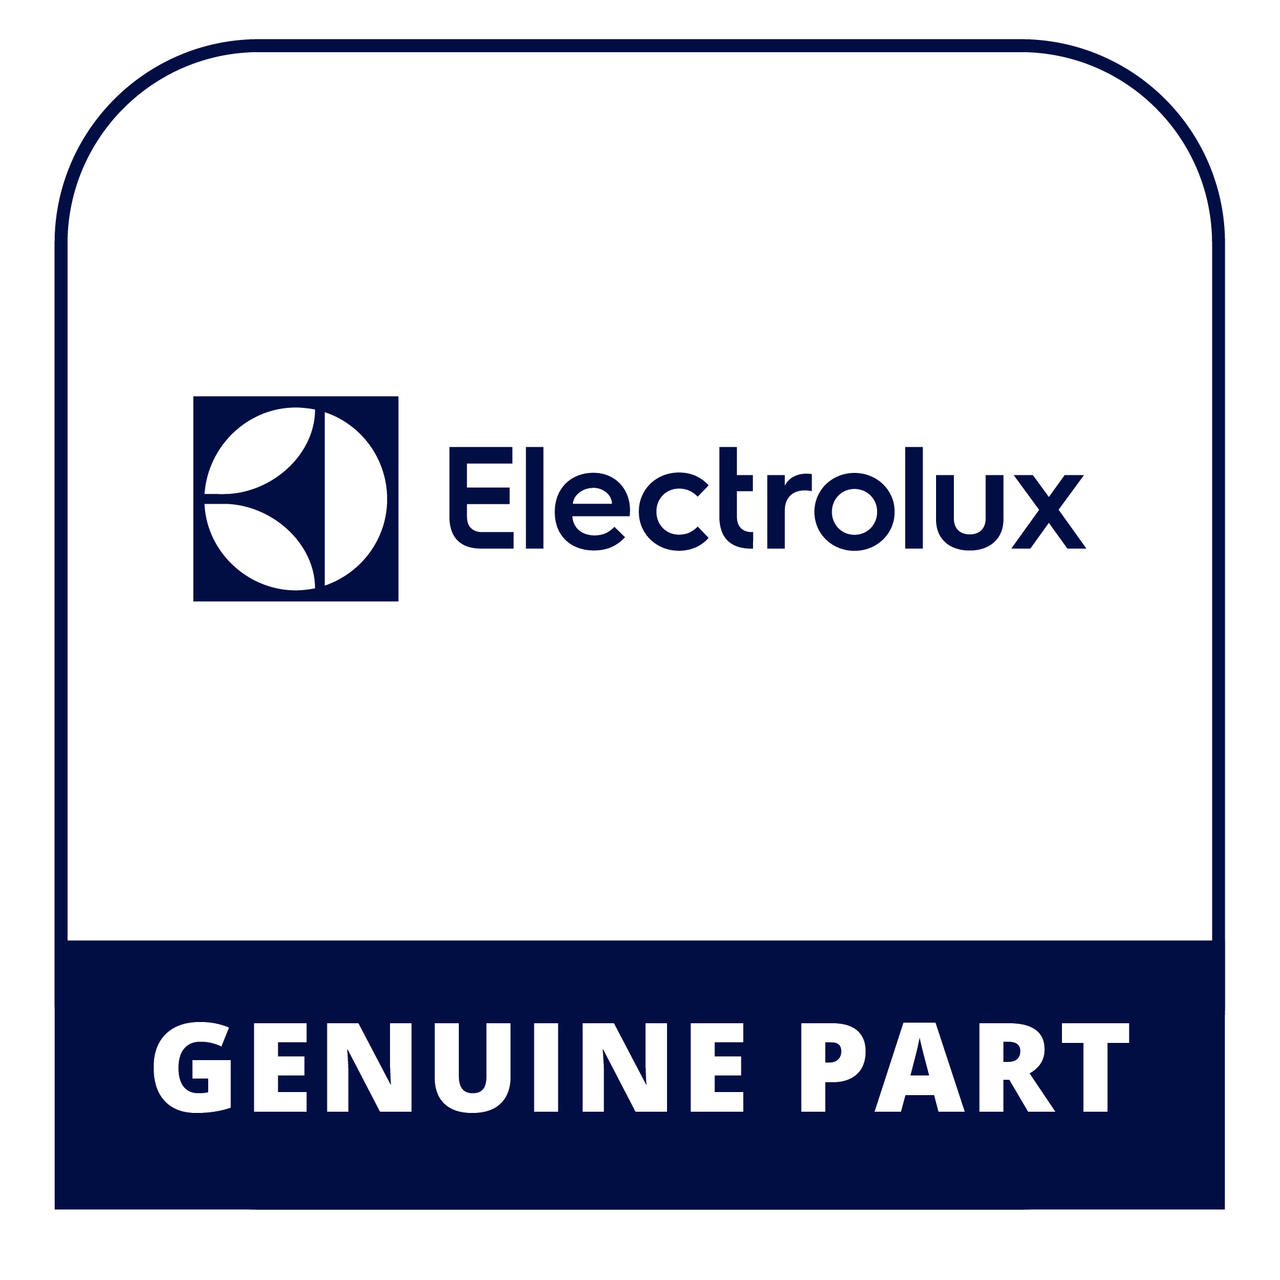 Frigidaire - Electrolux 240316108 Defrost Heater - Genuine Electrolux Part